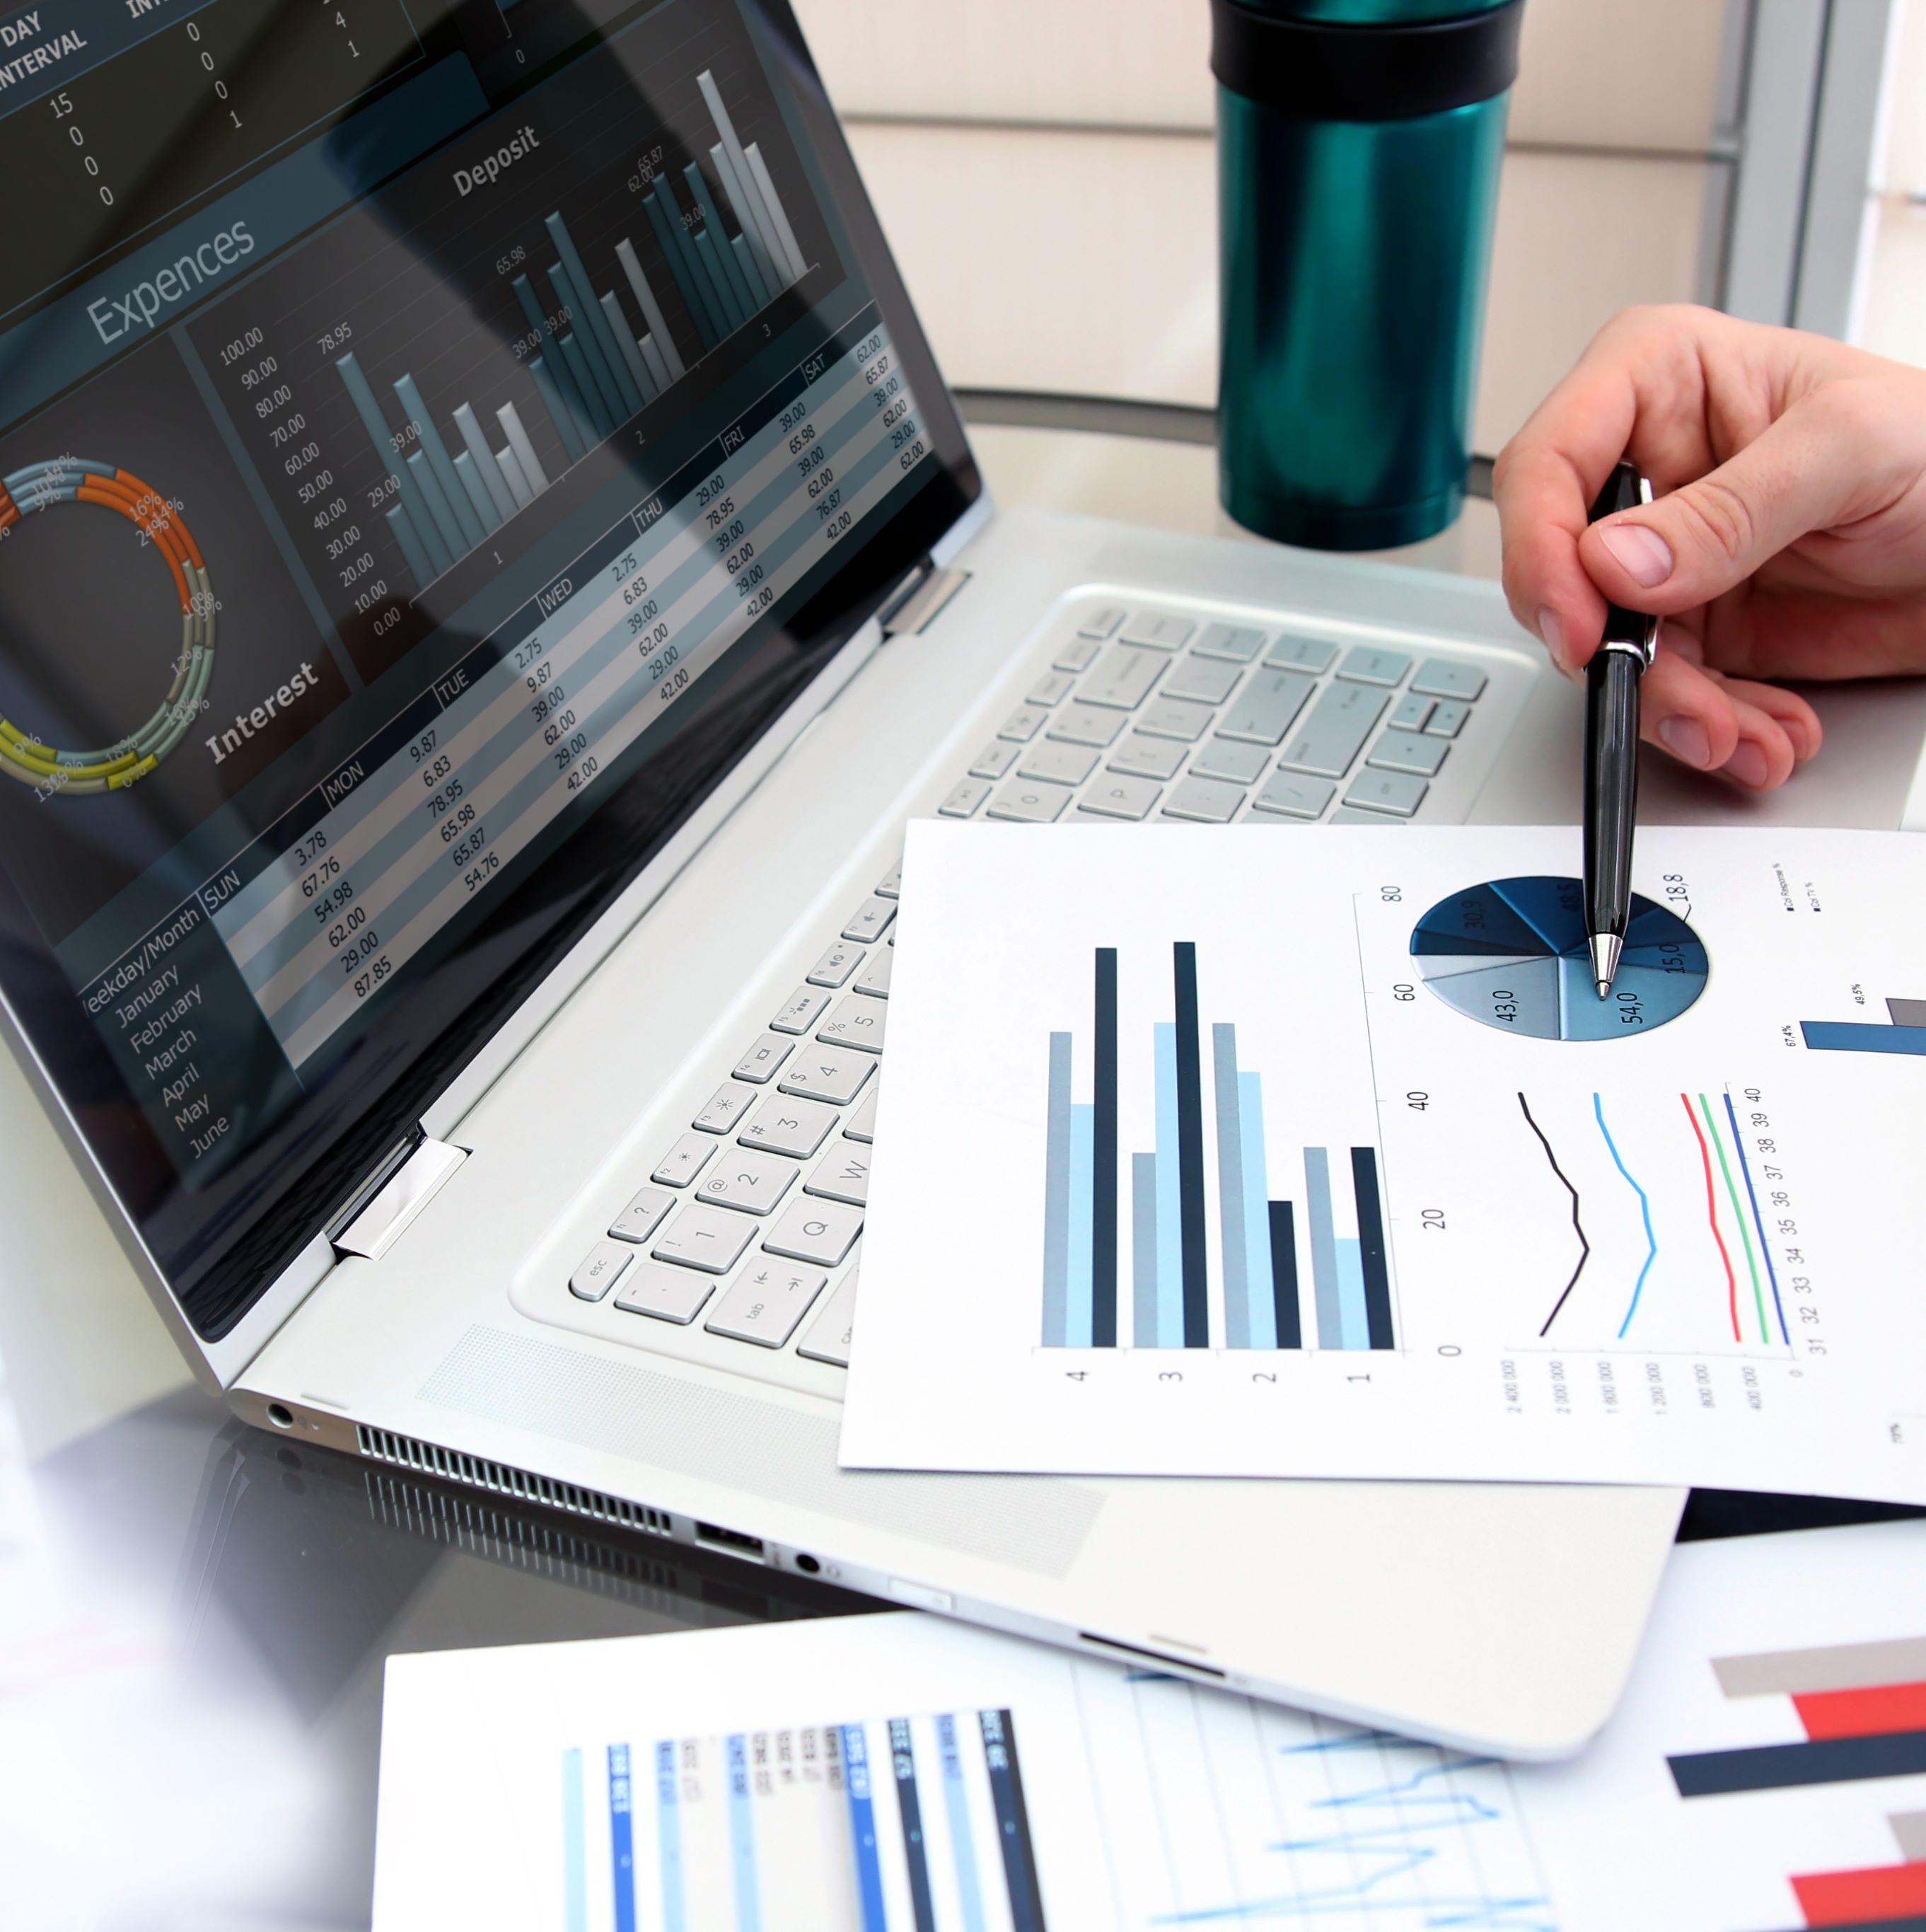 Financial data analysis software